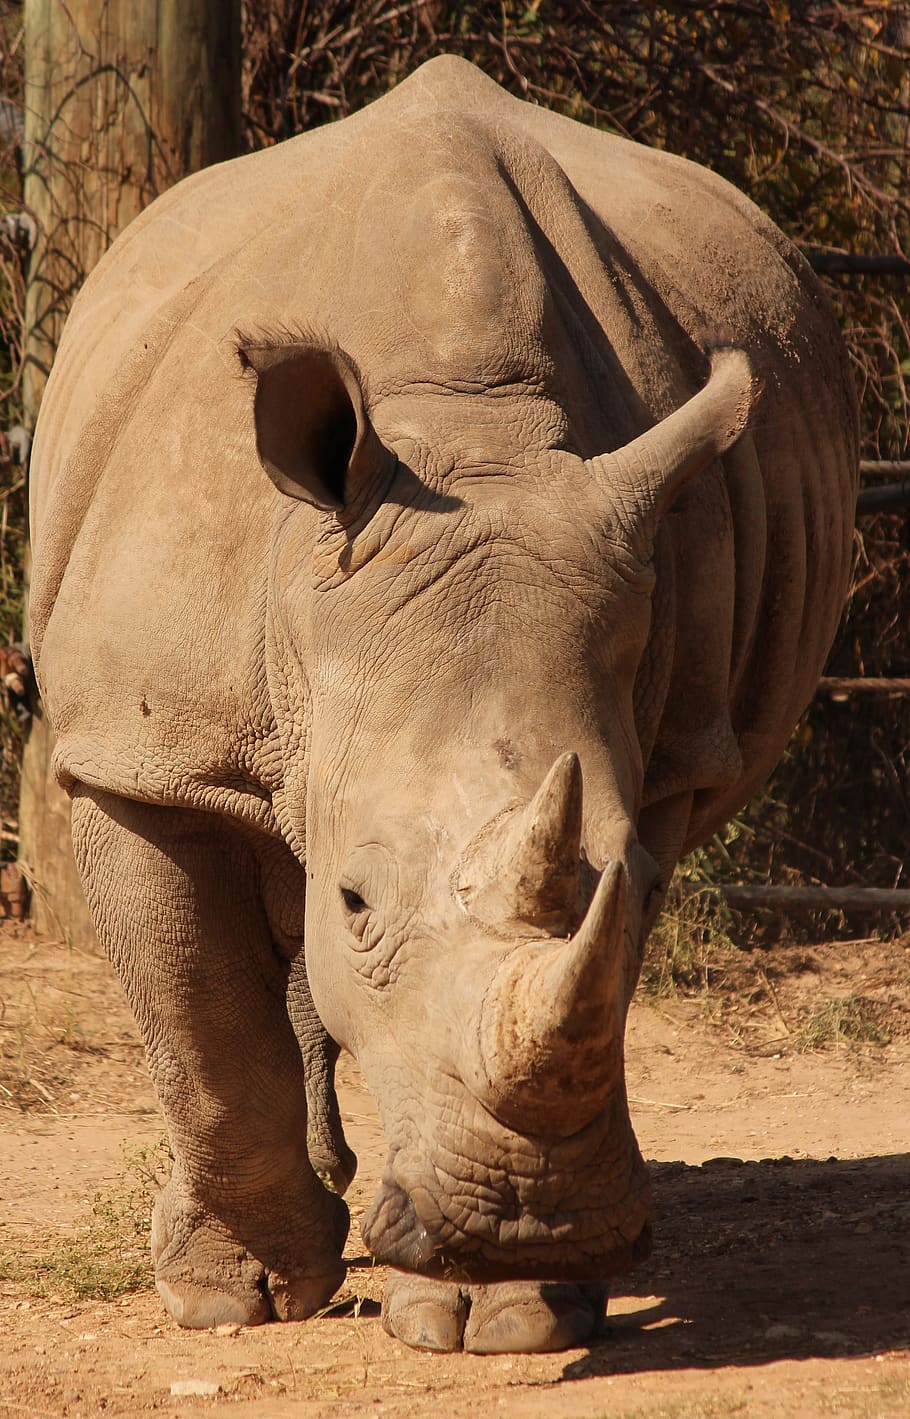 rhino, animal, zoo, africa, rhinoceros, pachyderm, horn, safari, wild, animal themes